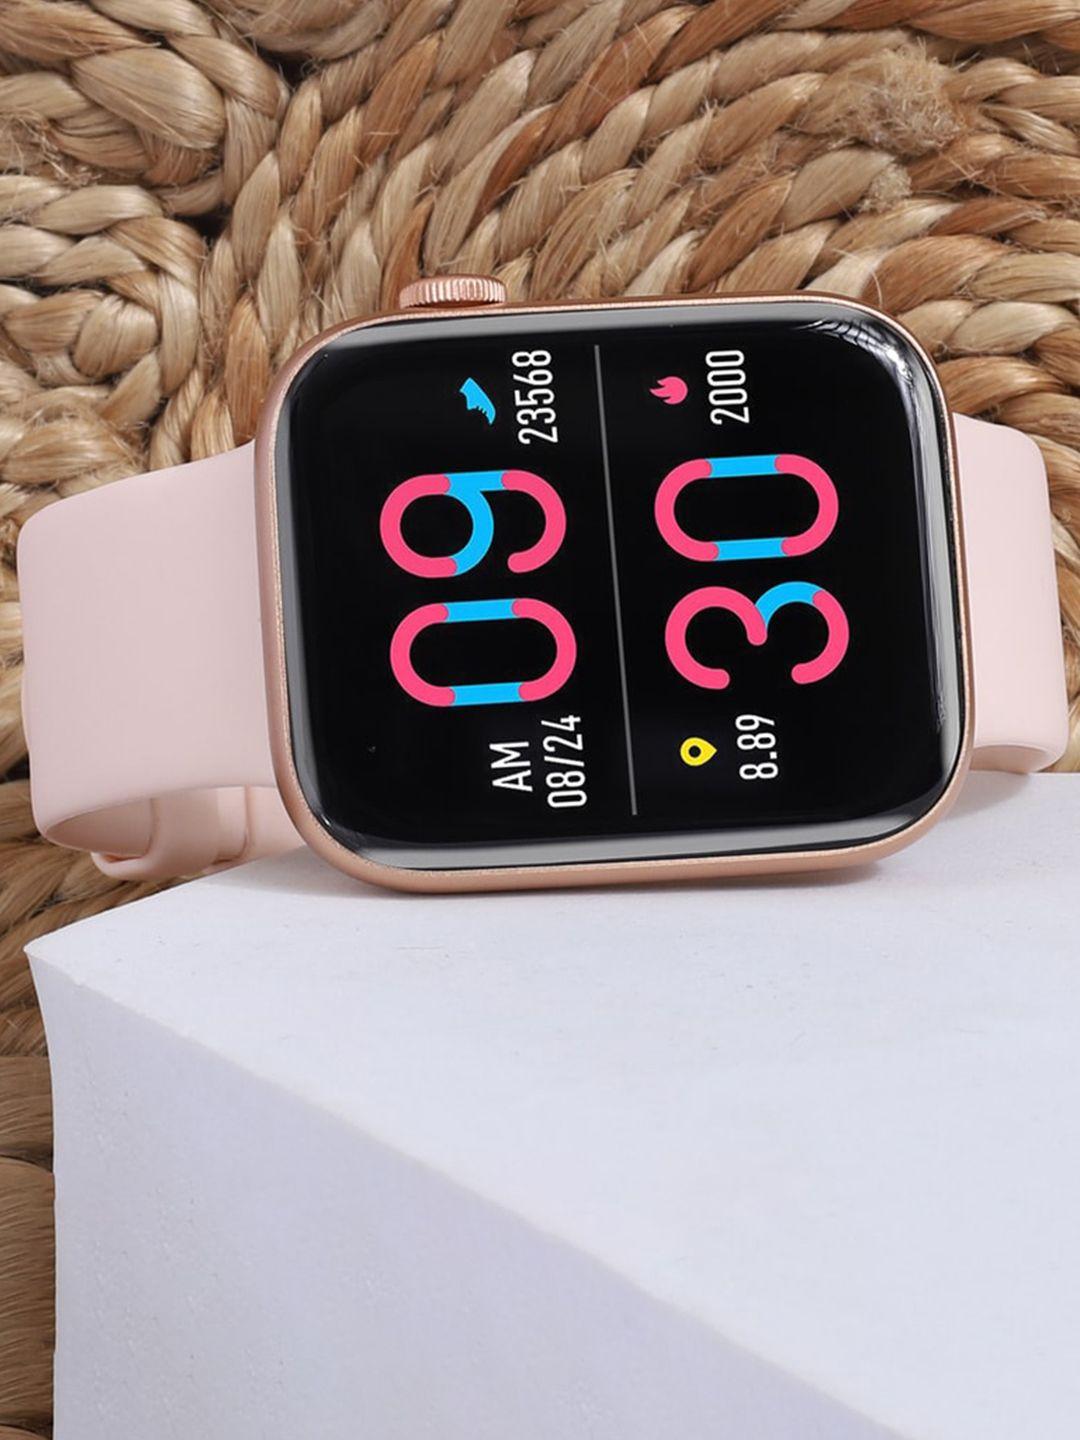 minix denver smartwatch 2.01" hd display smart watch ip68